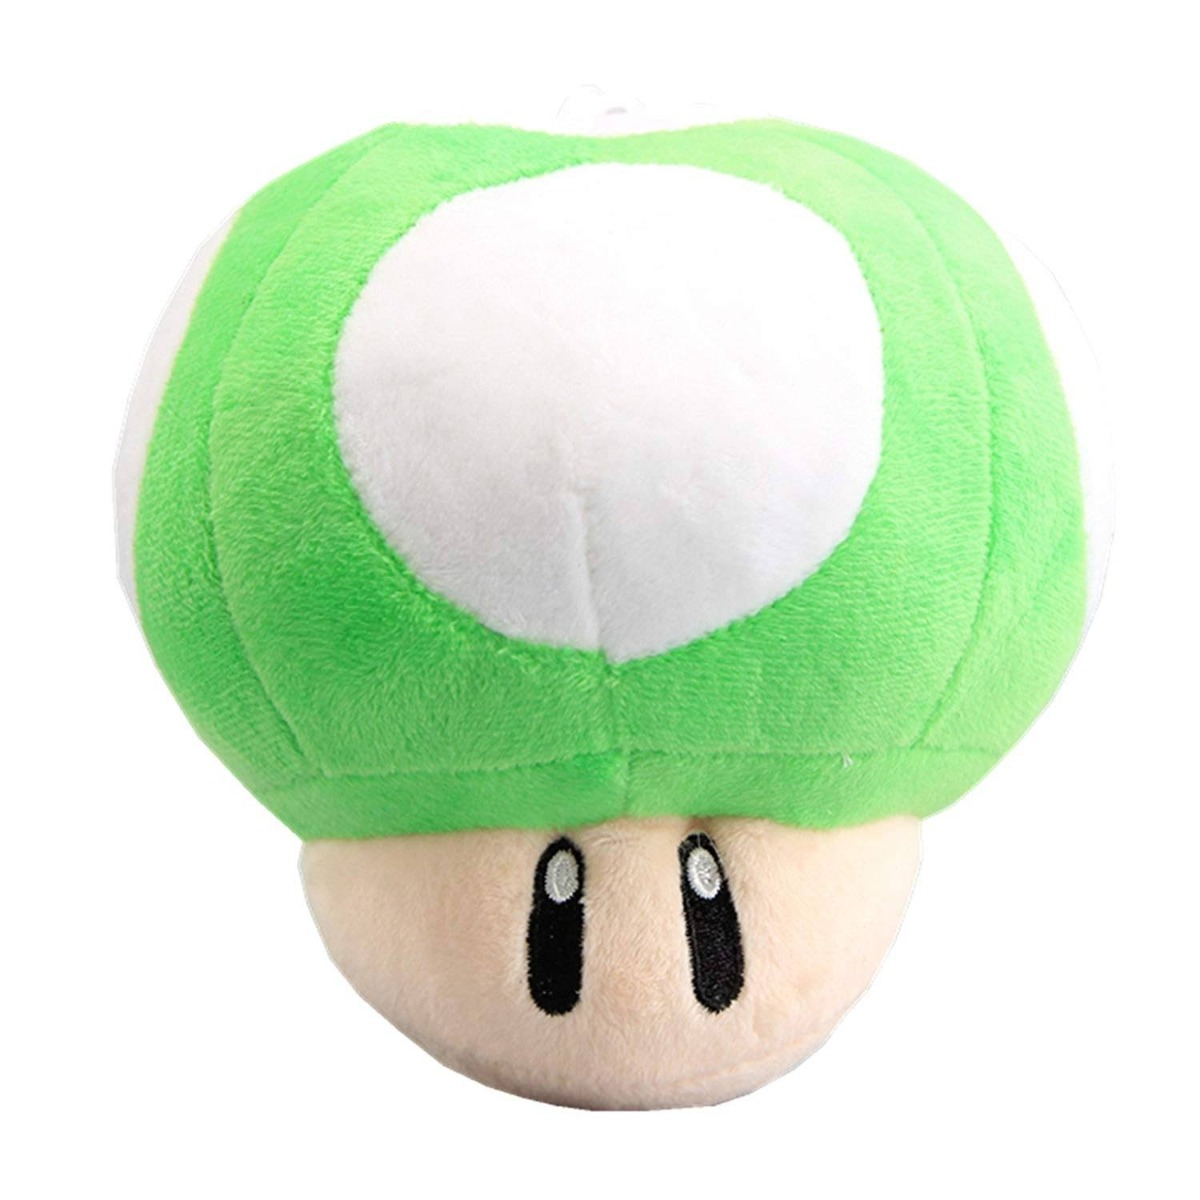 Extraliv Super Mario Mjukisdjur / Gosedjur - Grön svamp - Large